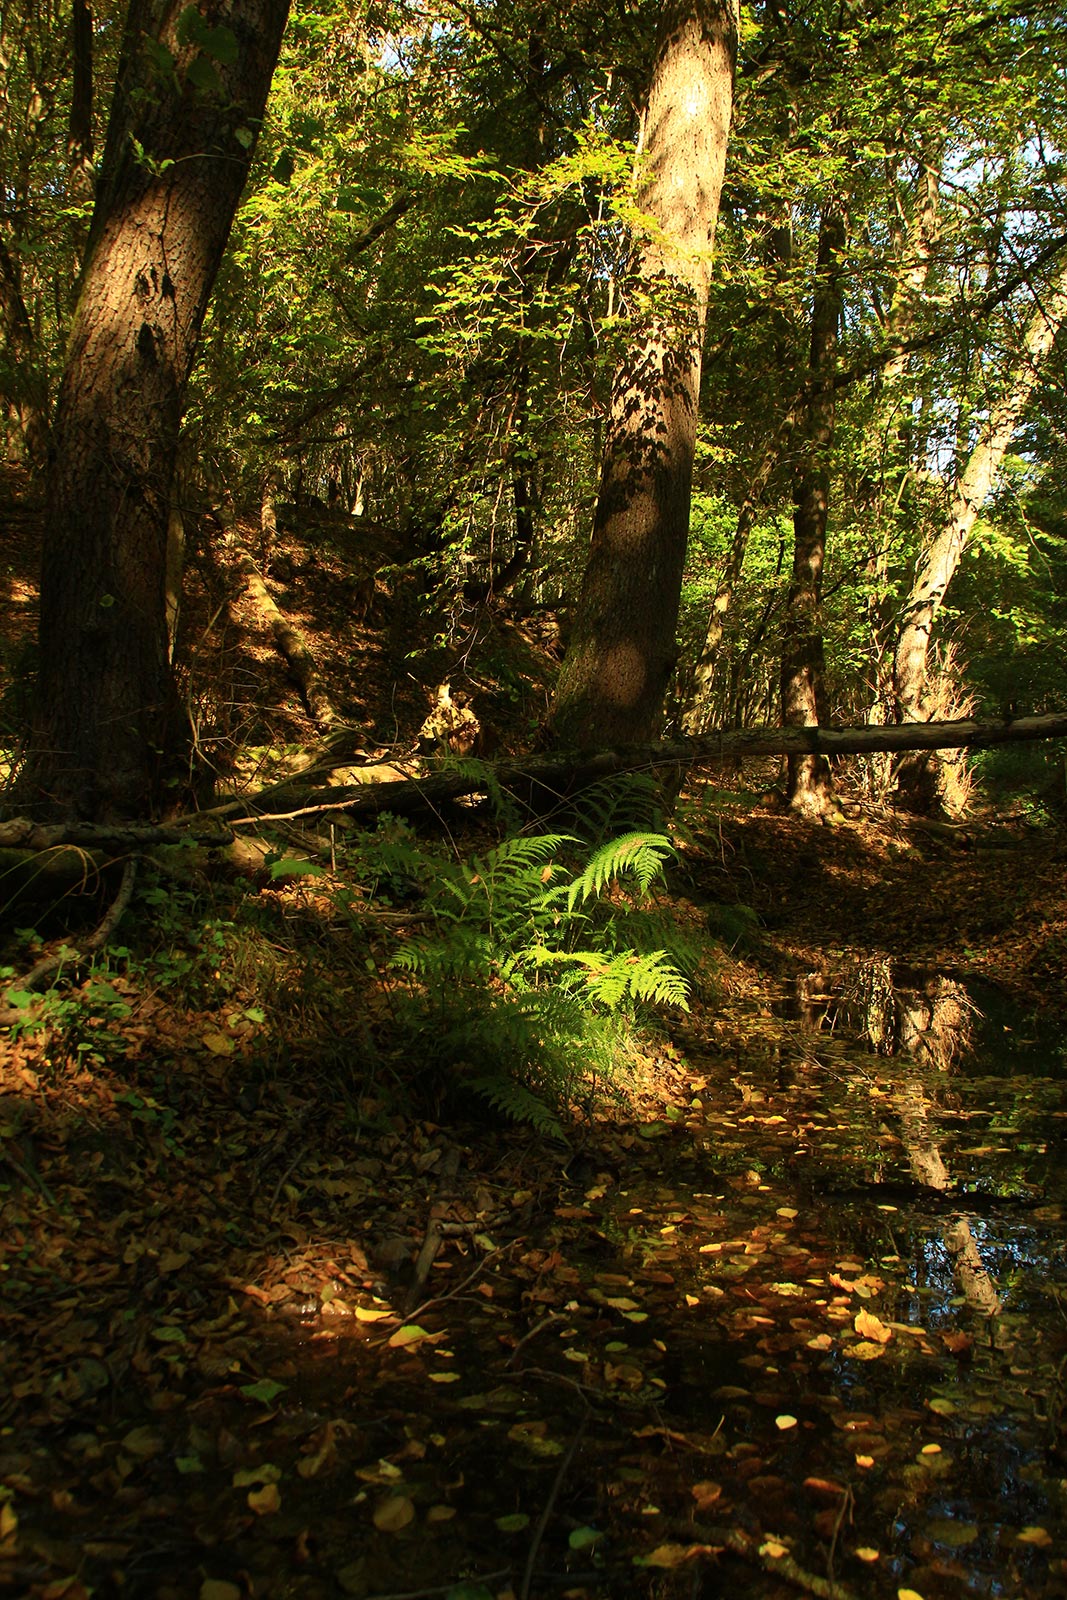 Alder forests along the stream